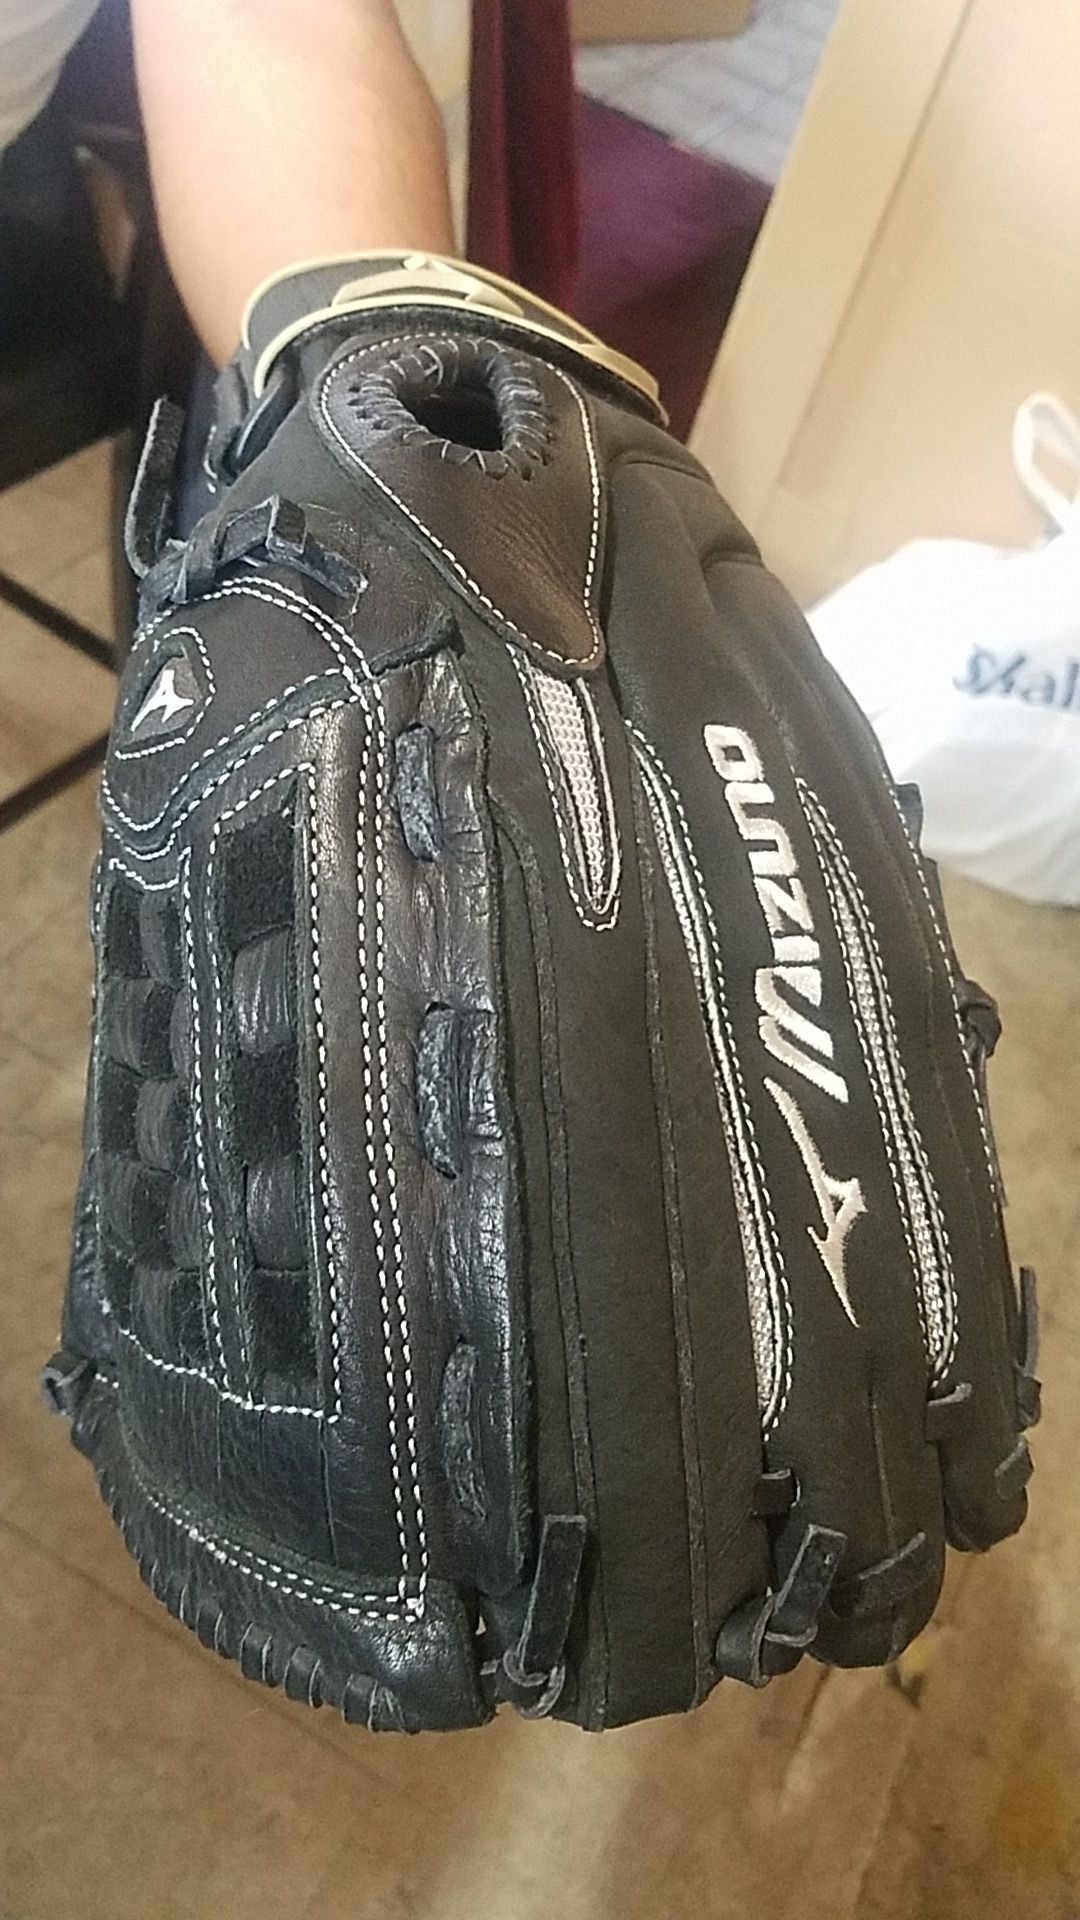 Mizuno softball glove 14 inches new